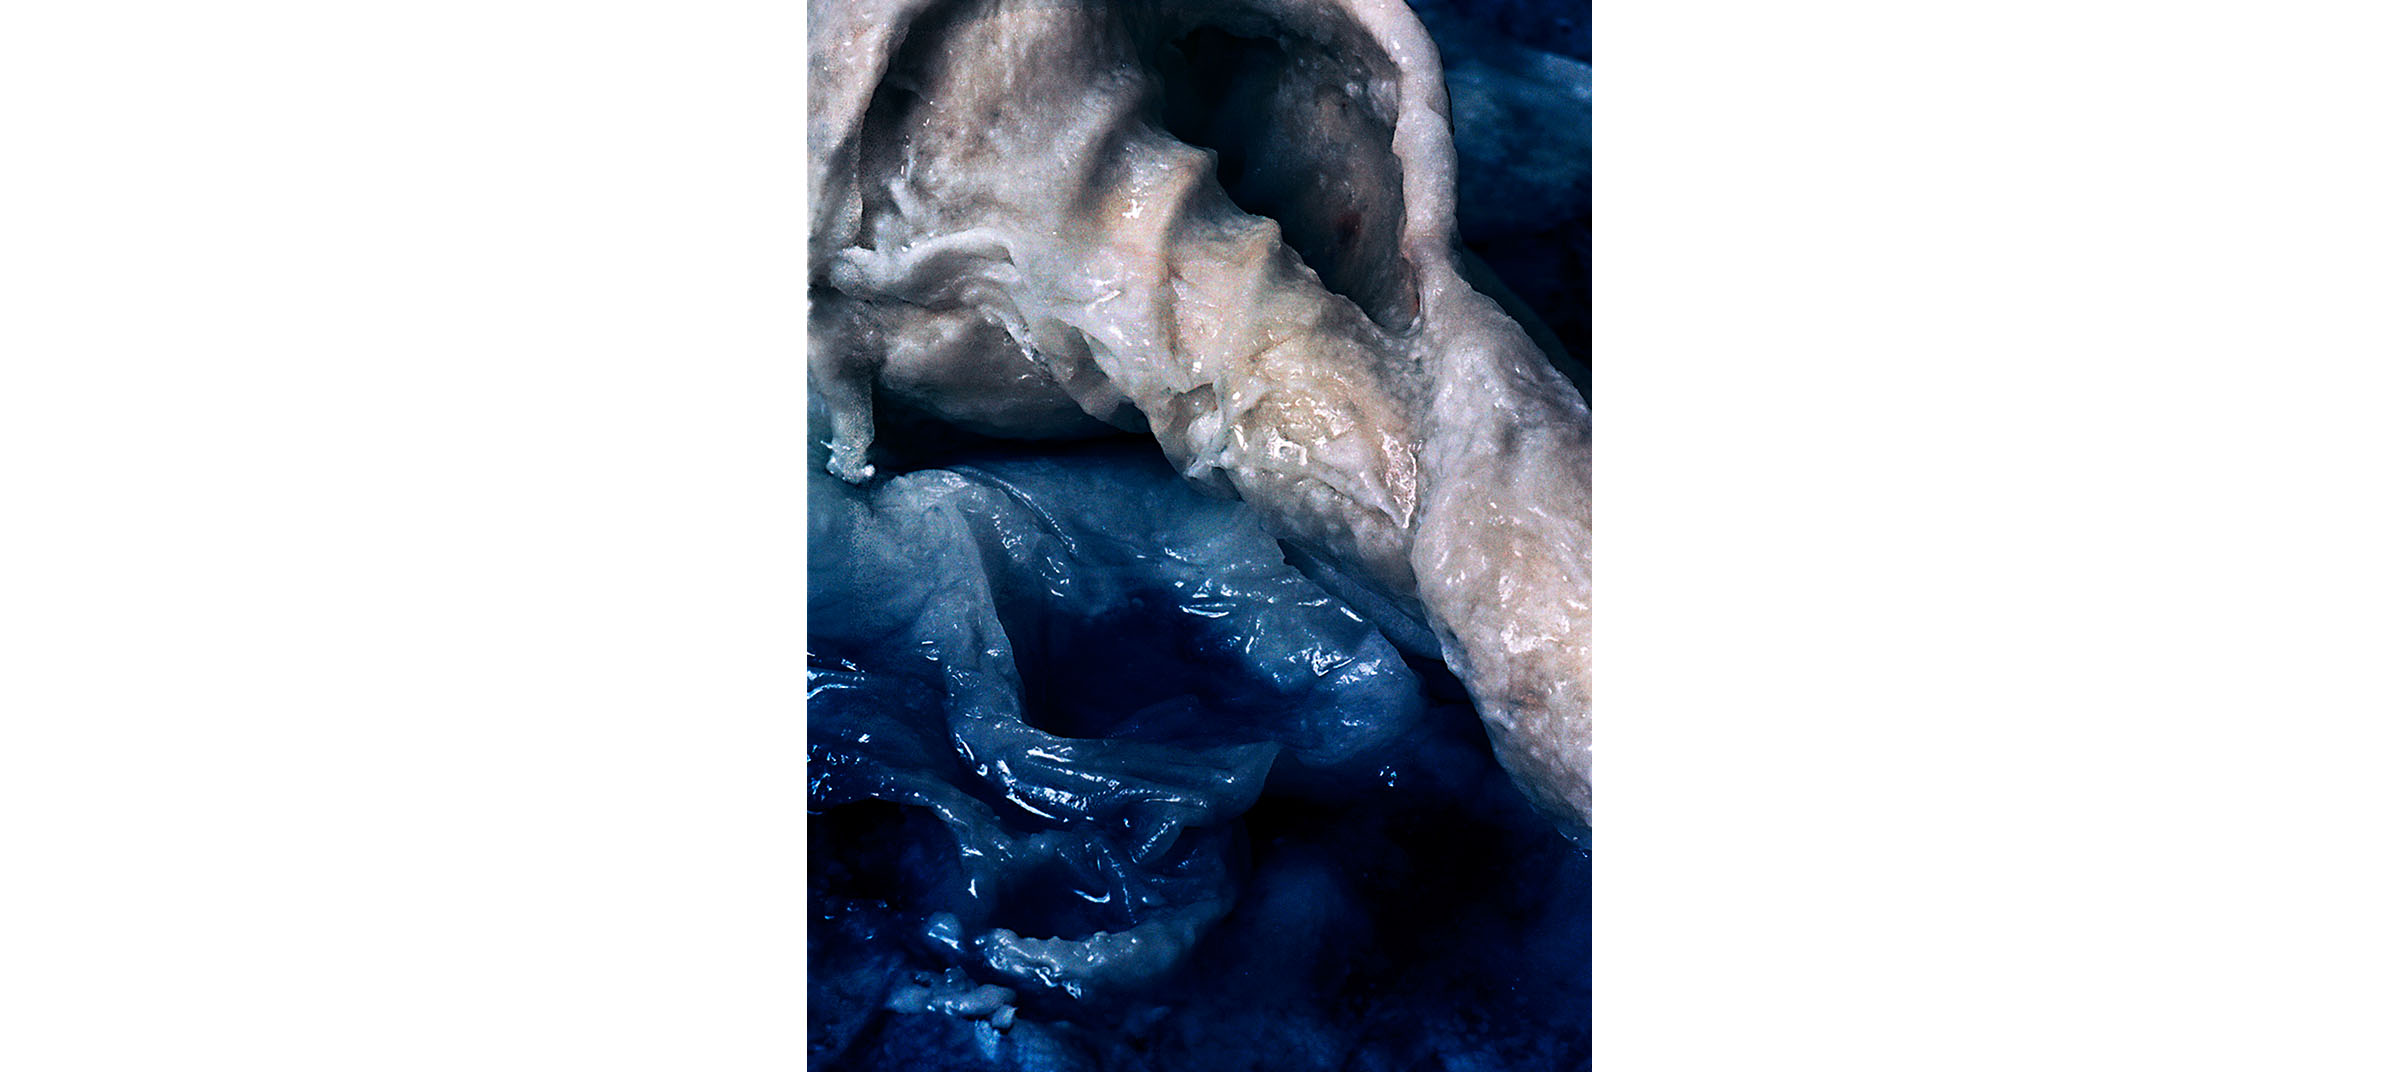   White Fluids  Untitled N°5, 2006/2015  T irage gélatino argentique, 144 x 104 cm chacun | Gelatin silver print, 56,69 x 40,94 inches each  3/4 